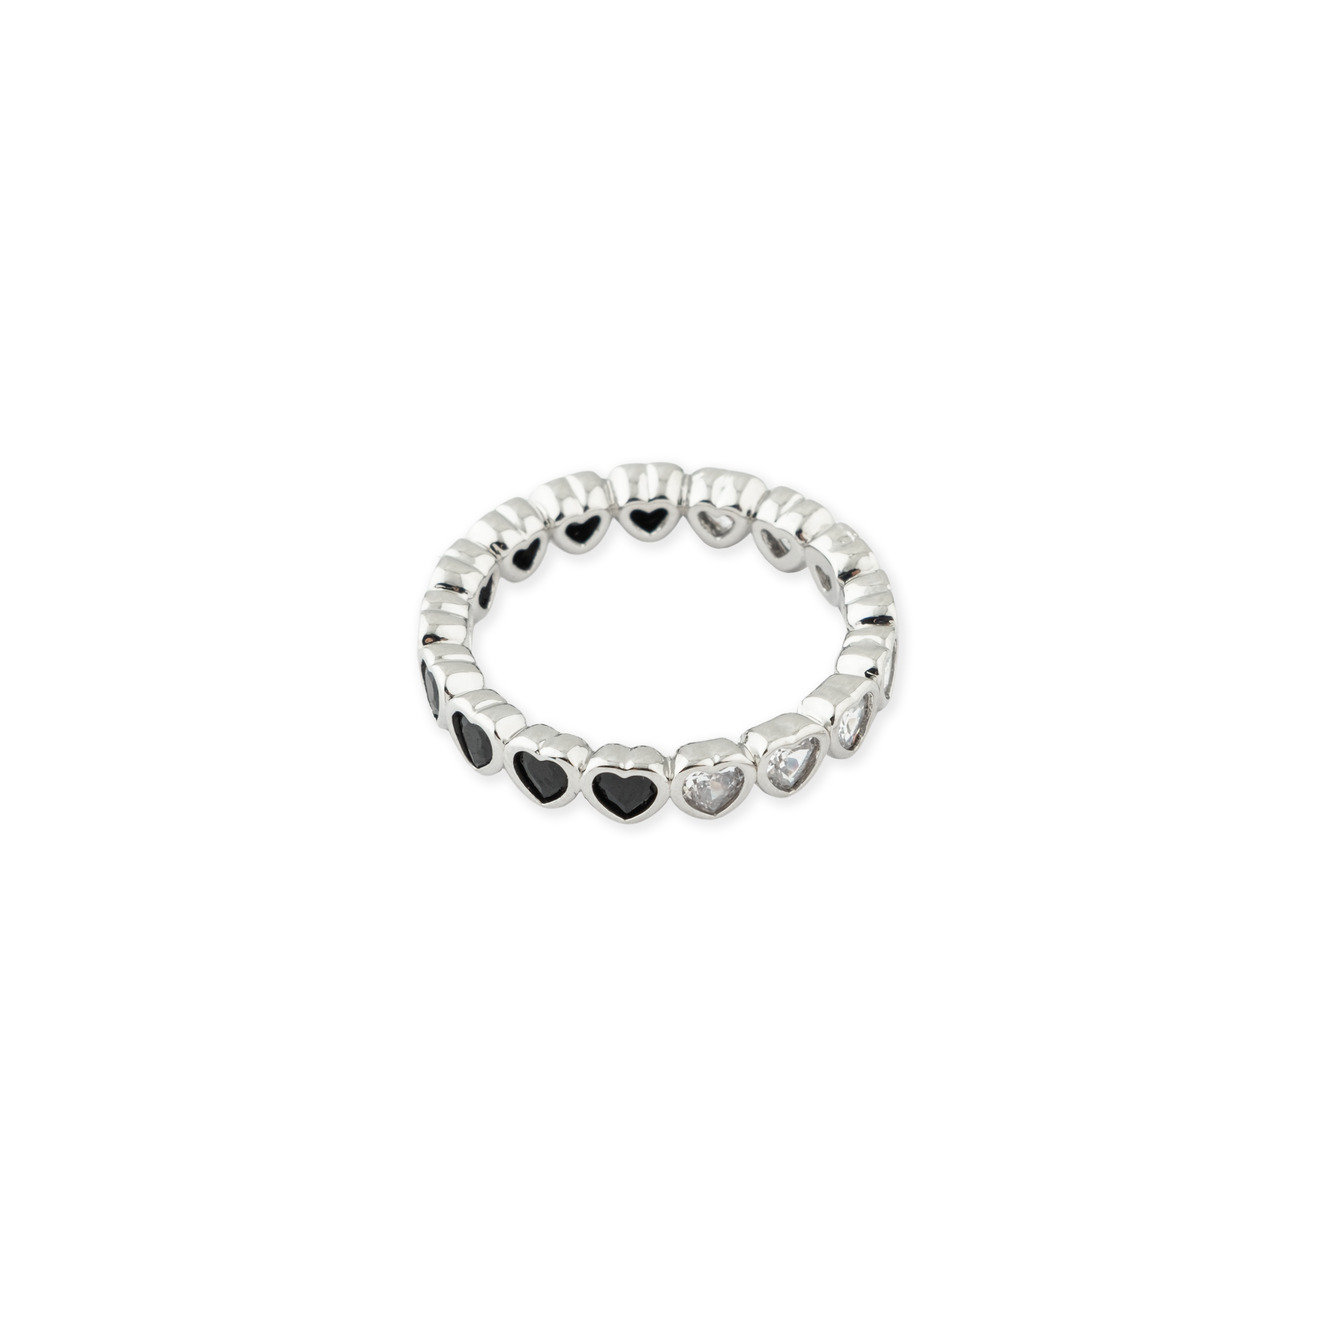 Herald Percy Серебристое кольцо из сердец с белыми и черными кристаллами herald percy серебристое кольцо из сердец с белыми и розовыми кристаллами